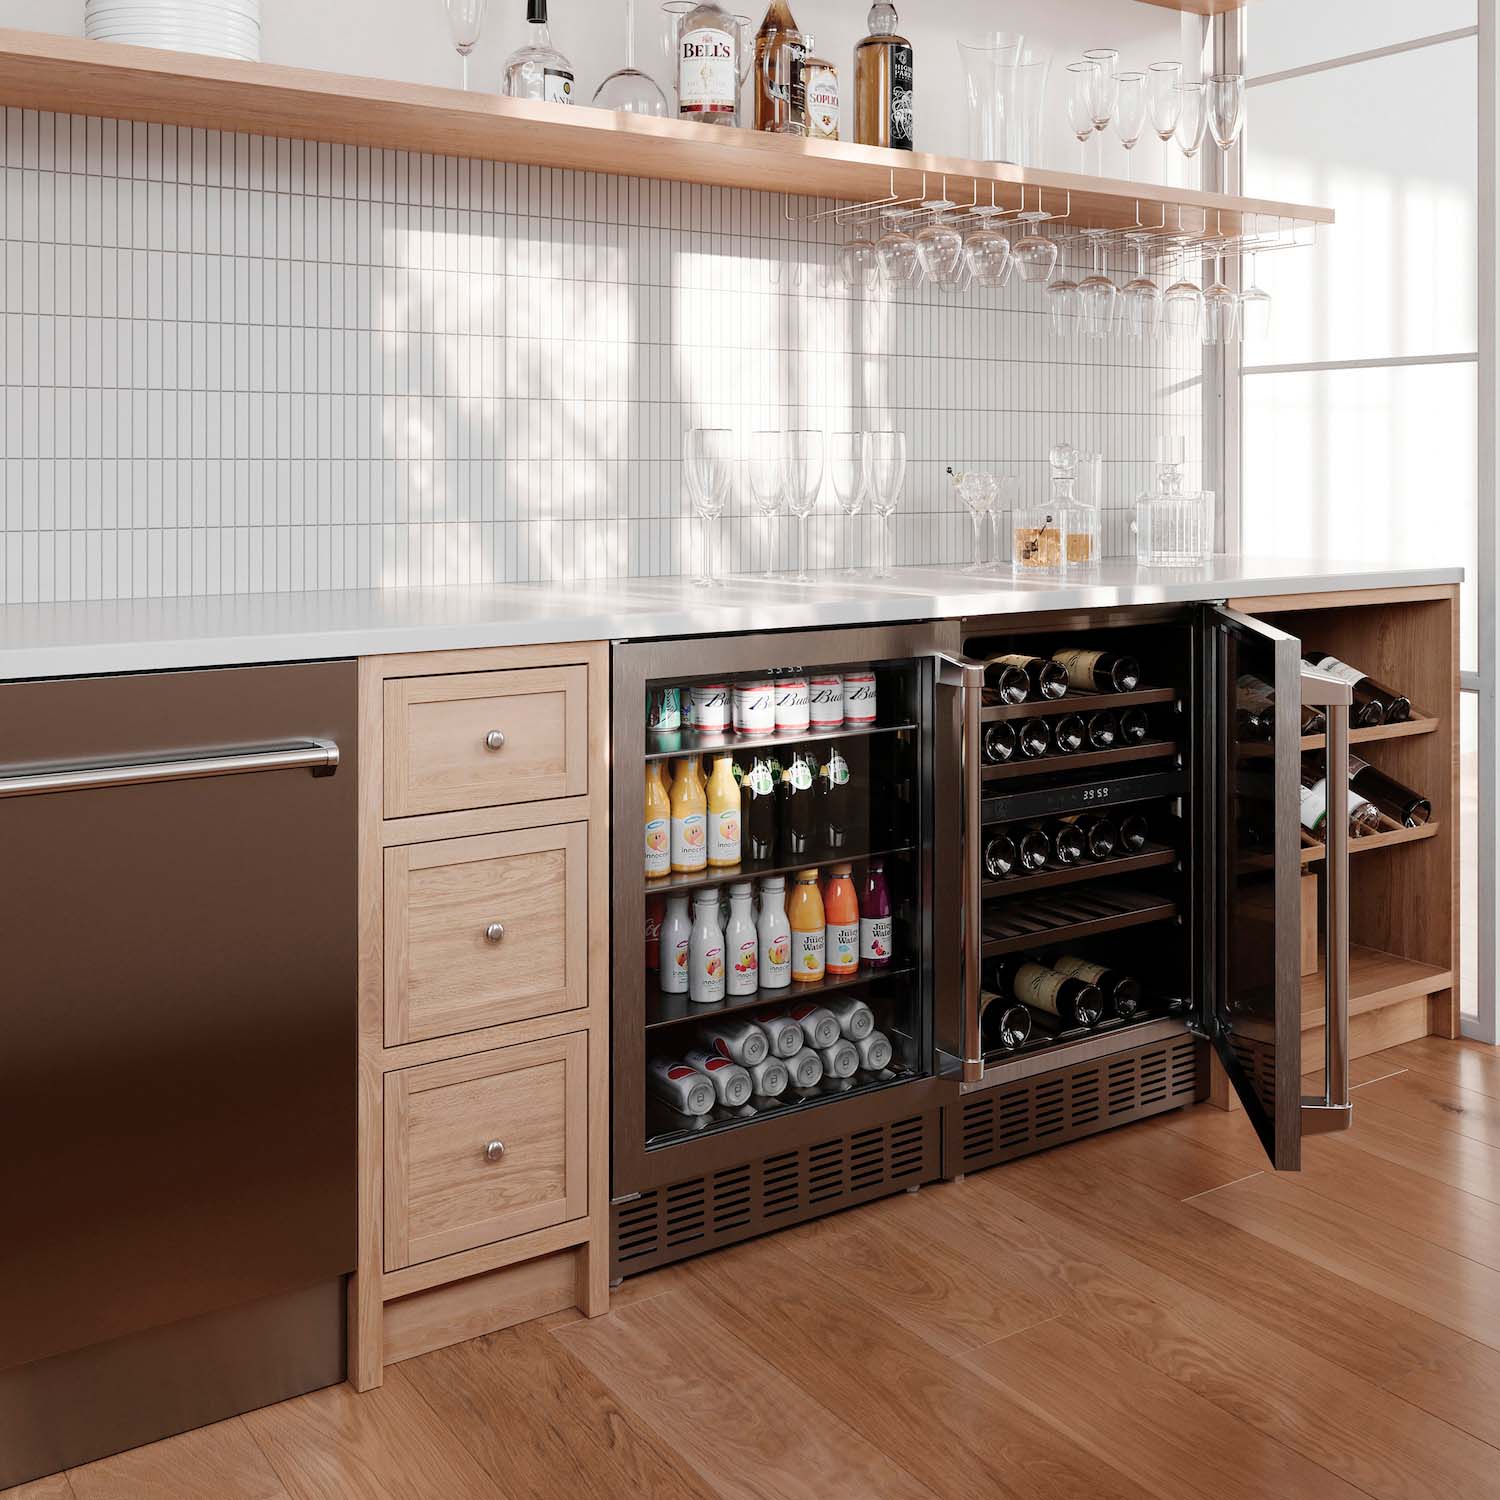 ZLINE 24" Wine Cooler and 24" Beverage Fridge in a custom built-in wooden mini bar area.